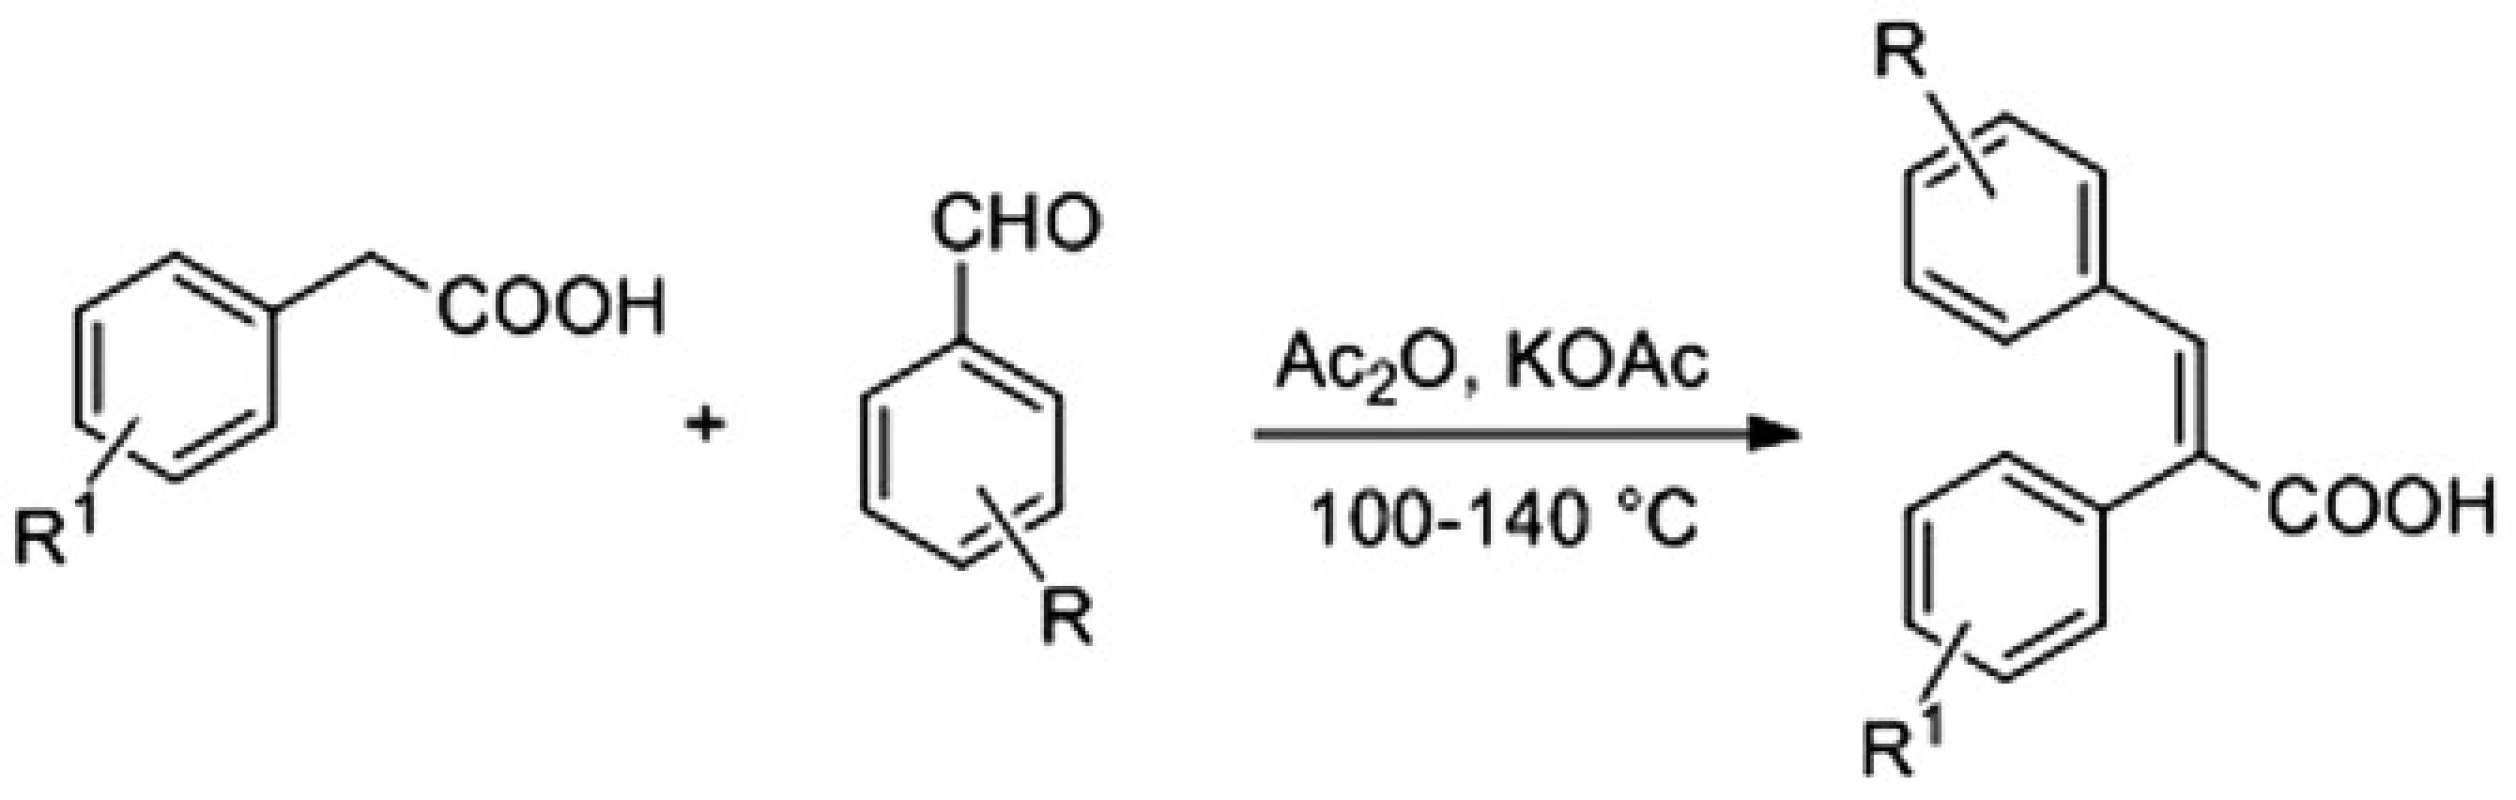 Synthesis of α-arylcinnamic acids